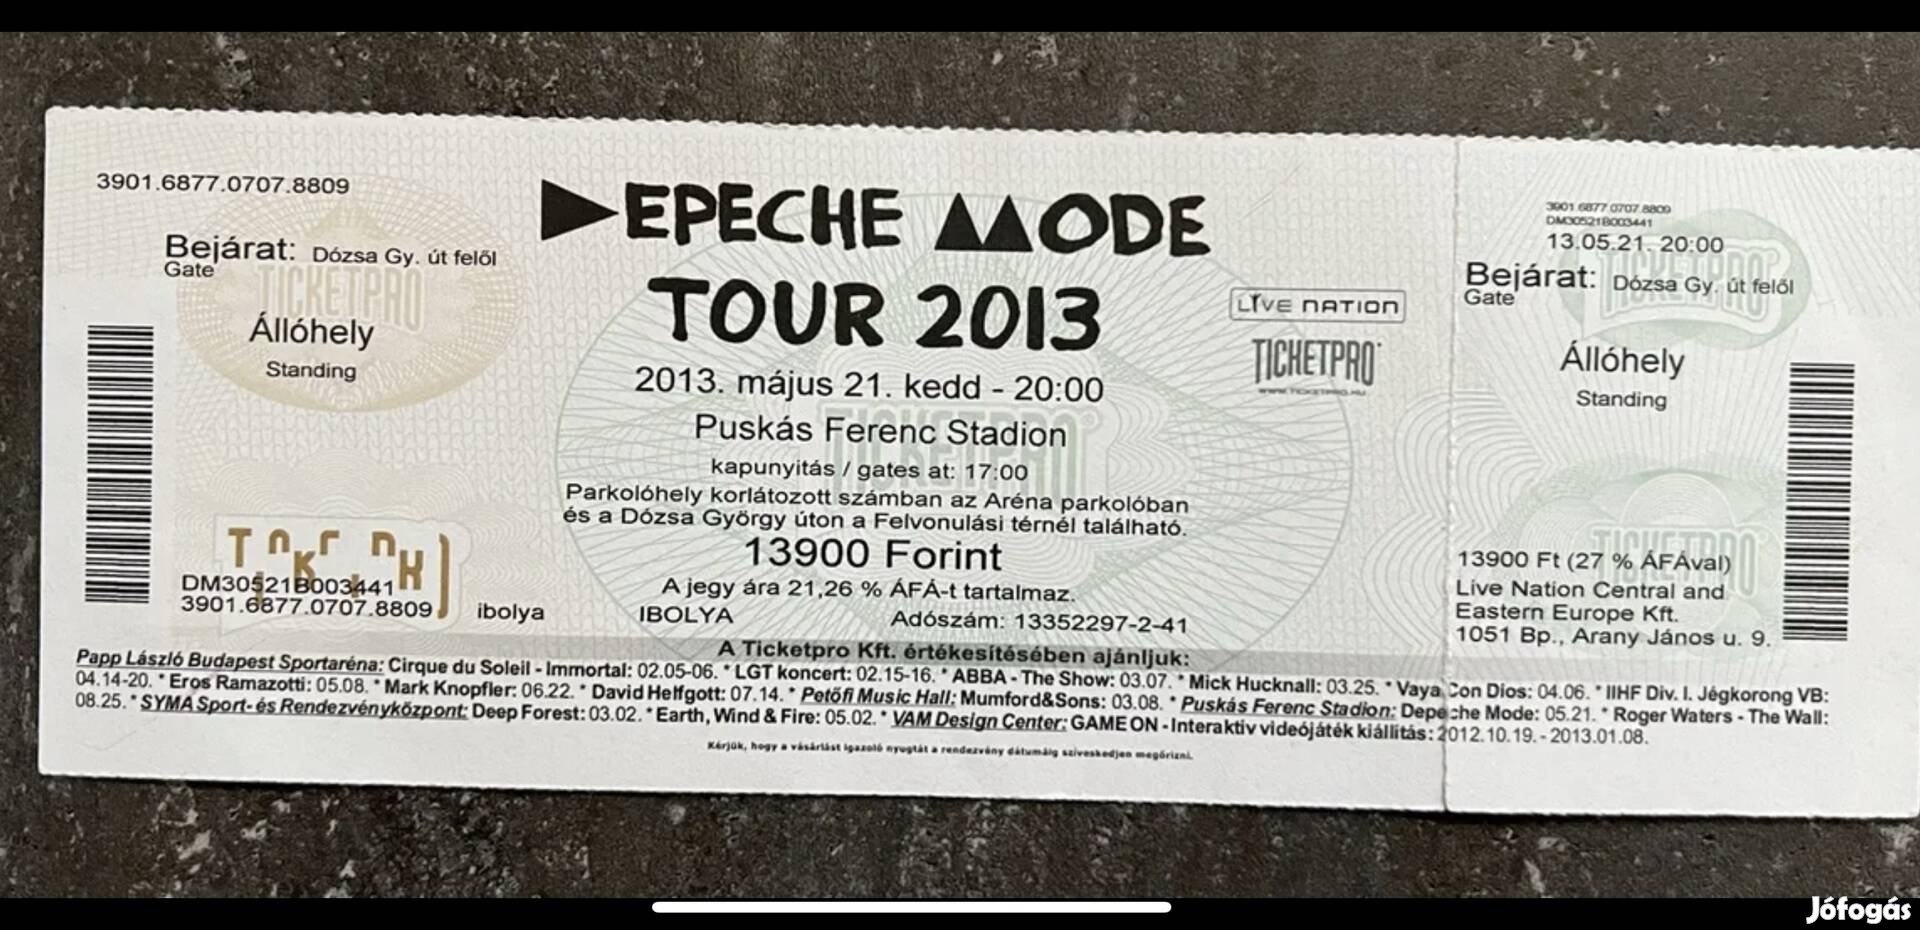 Depeche Mode koncertjegy 2013 gyűjtőknek